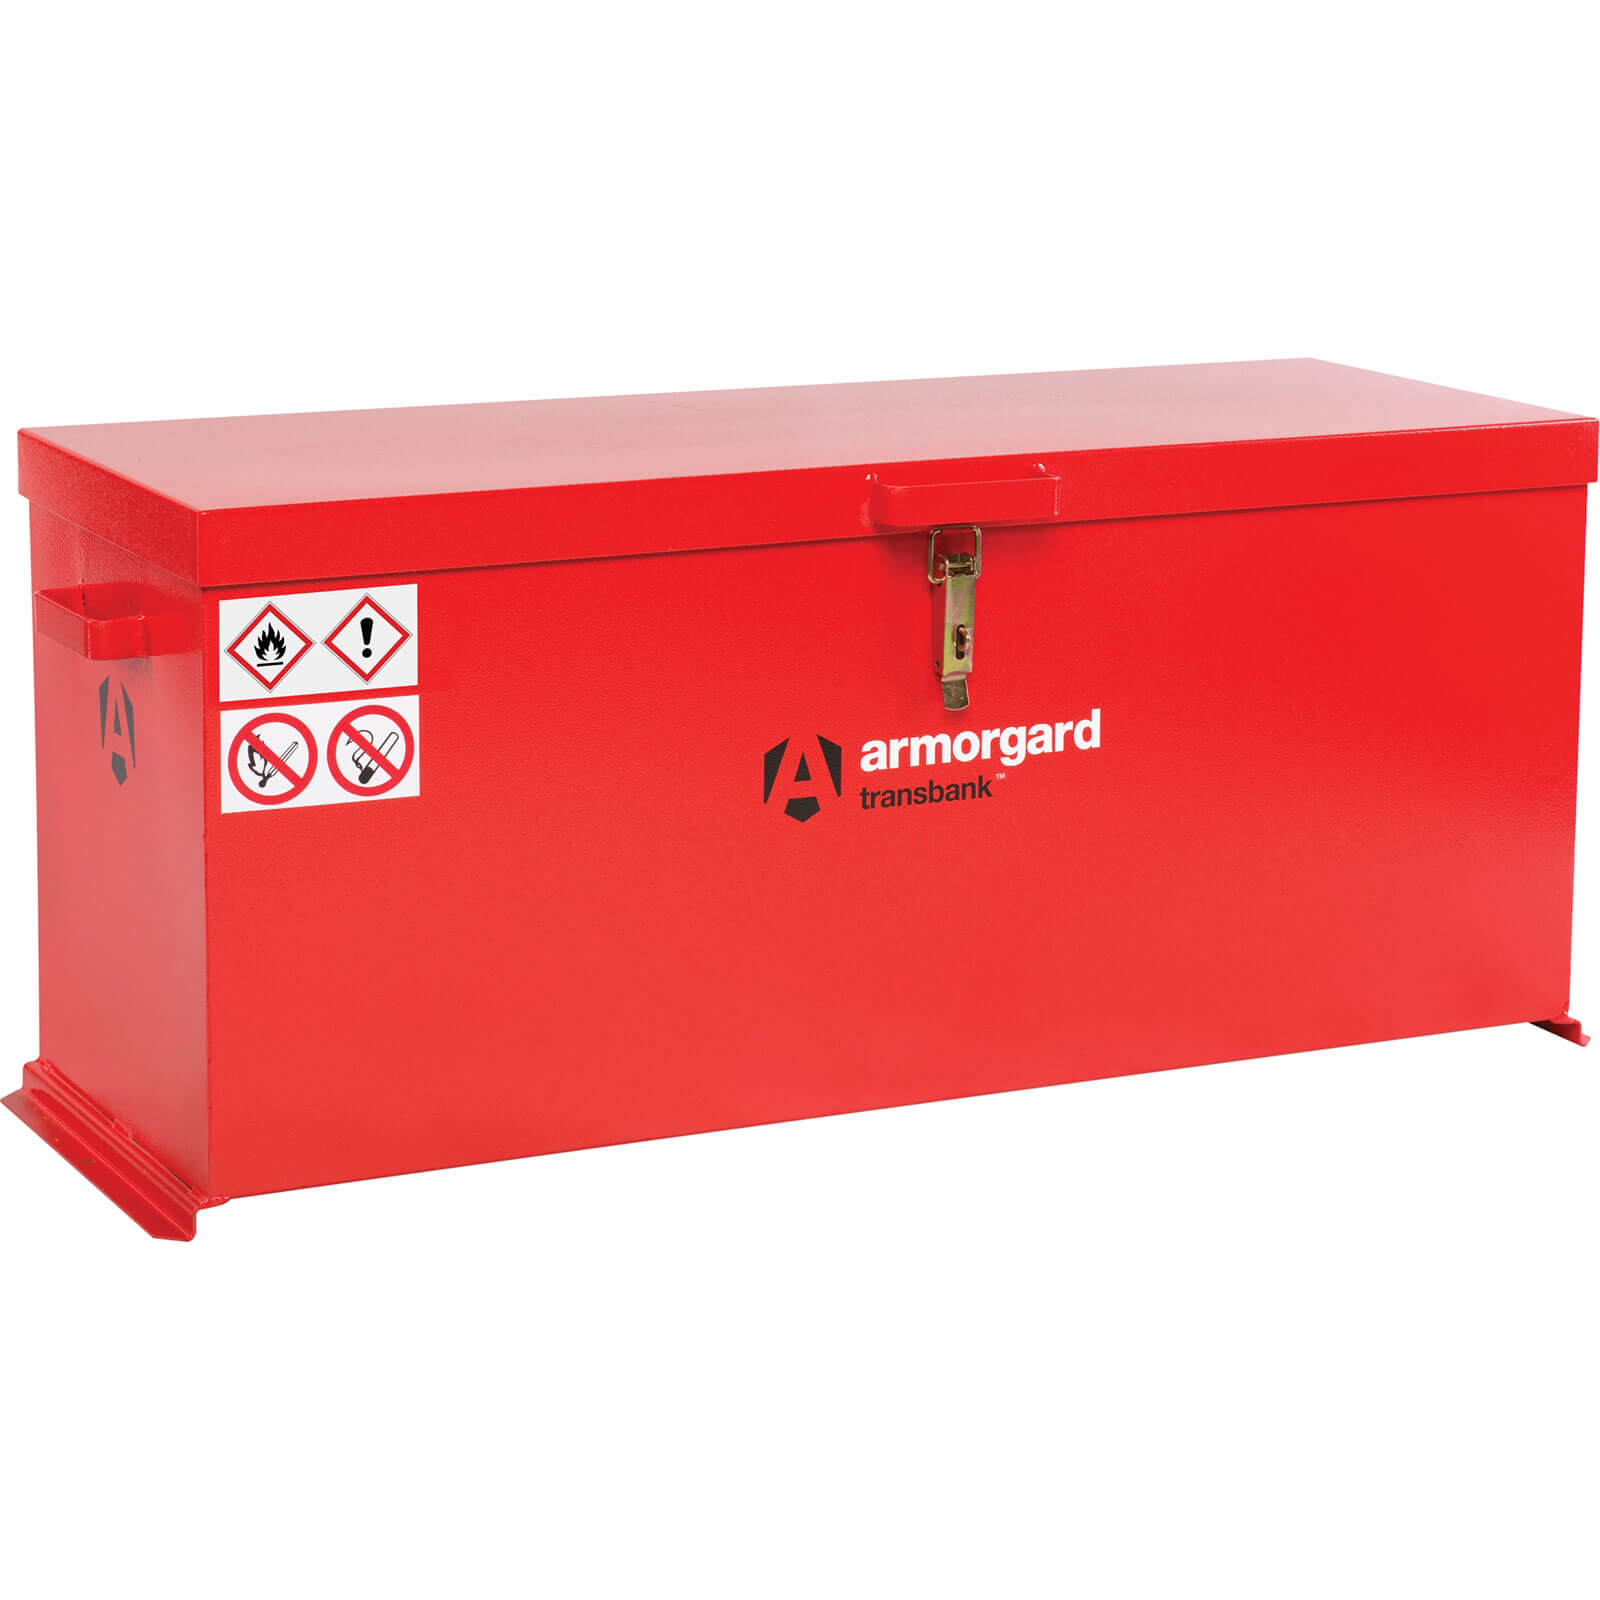 Image of Armorgard Transbank Hazardous Goods Secure Storage Box 1196mm 485mm 540mm